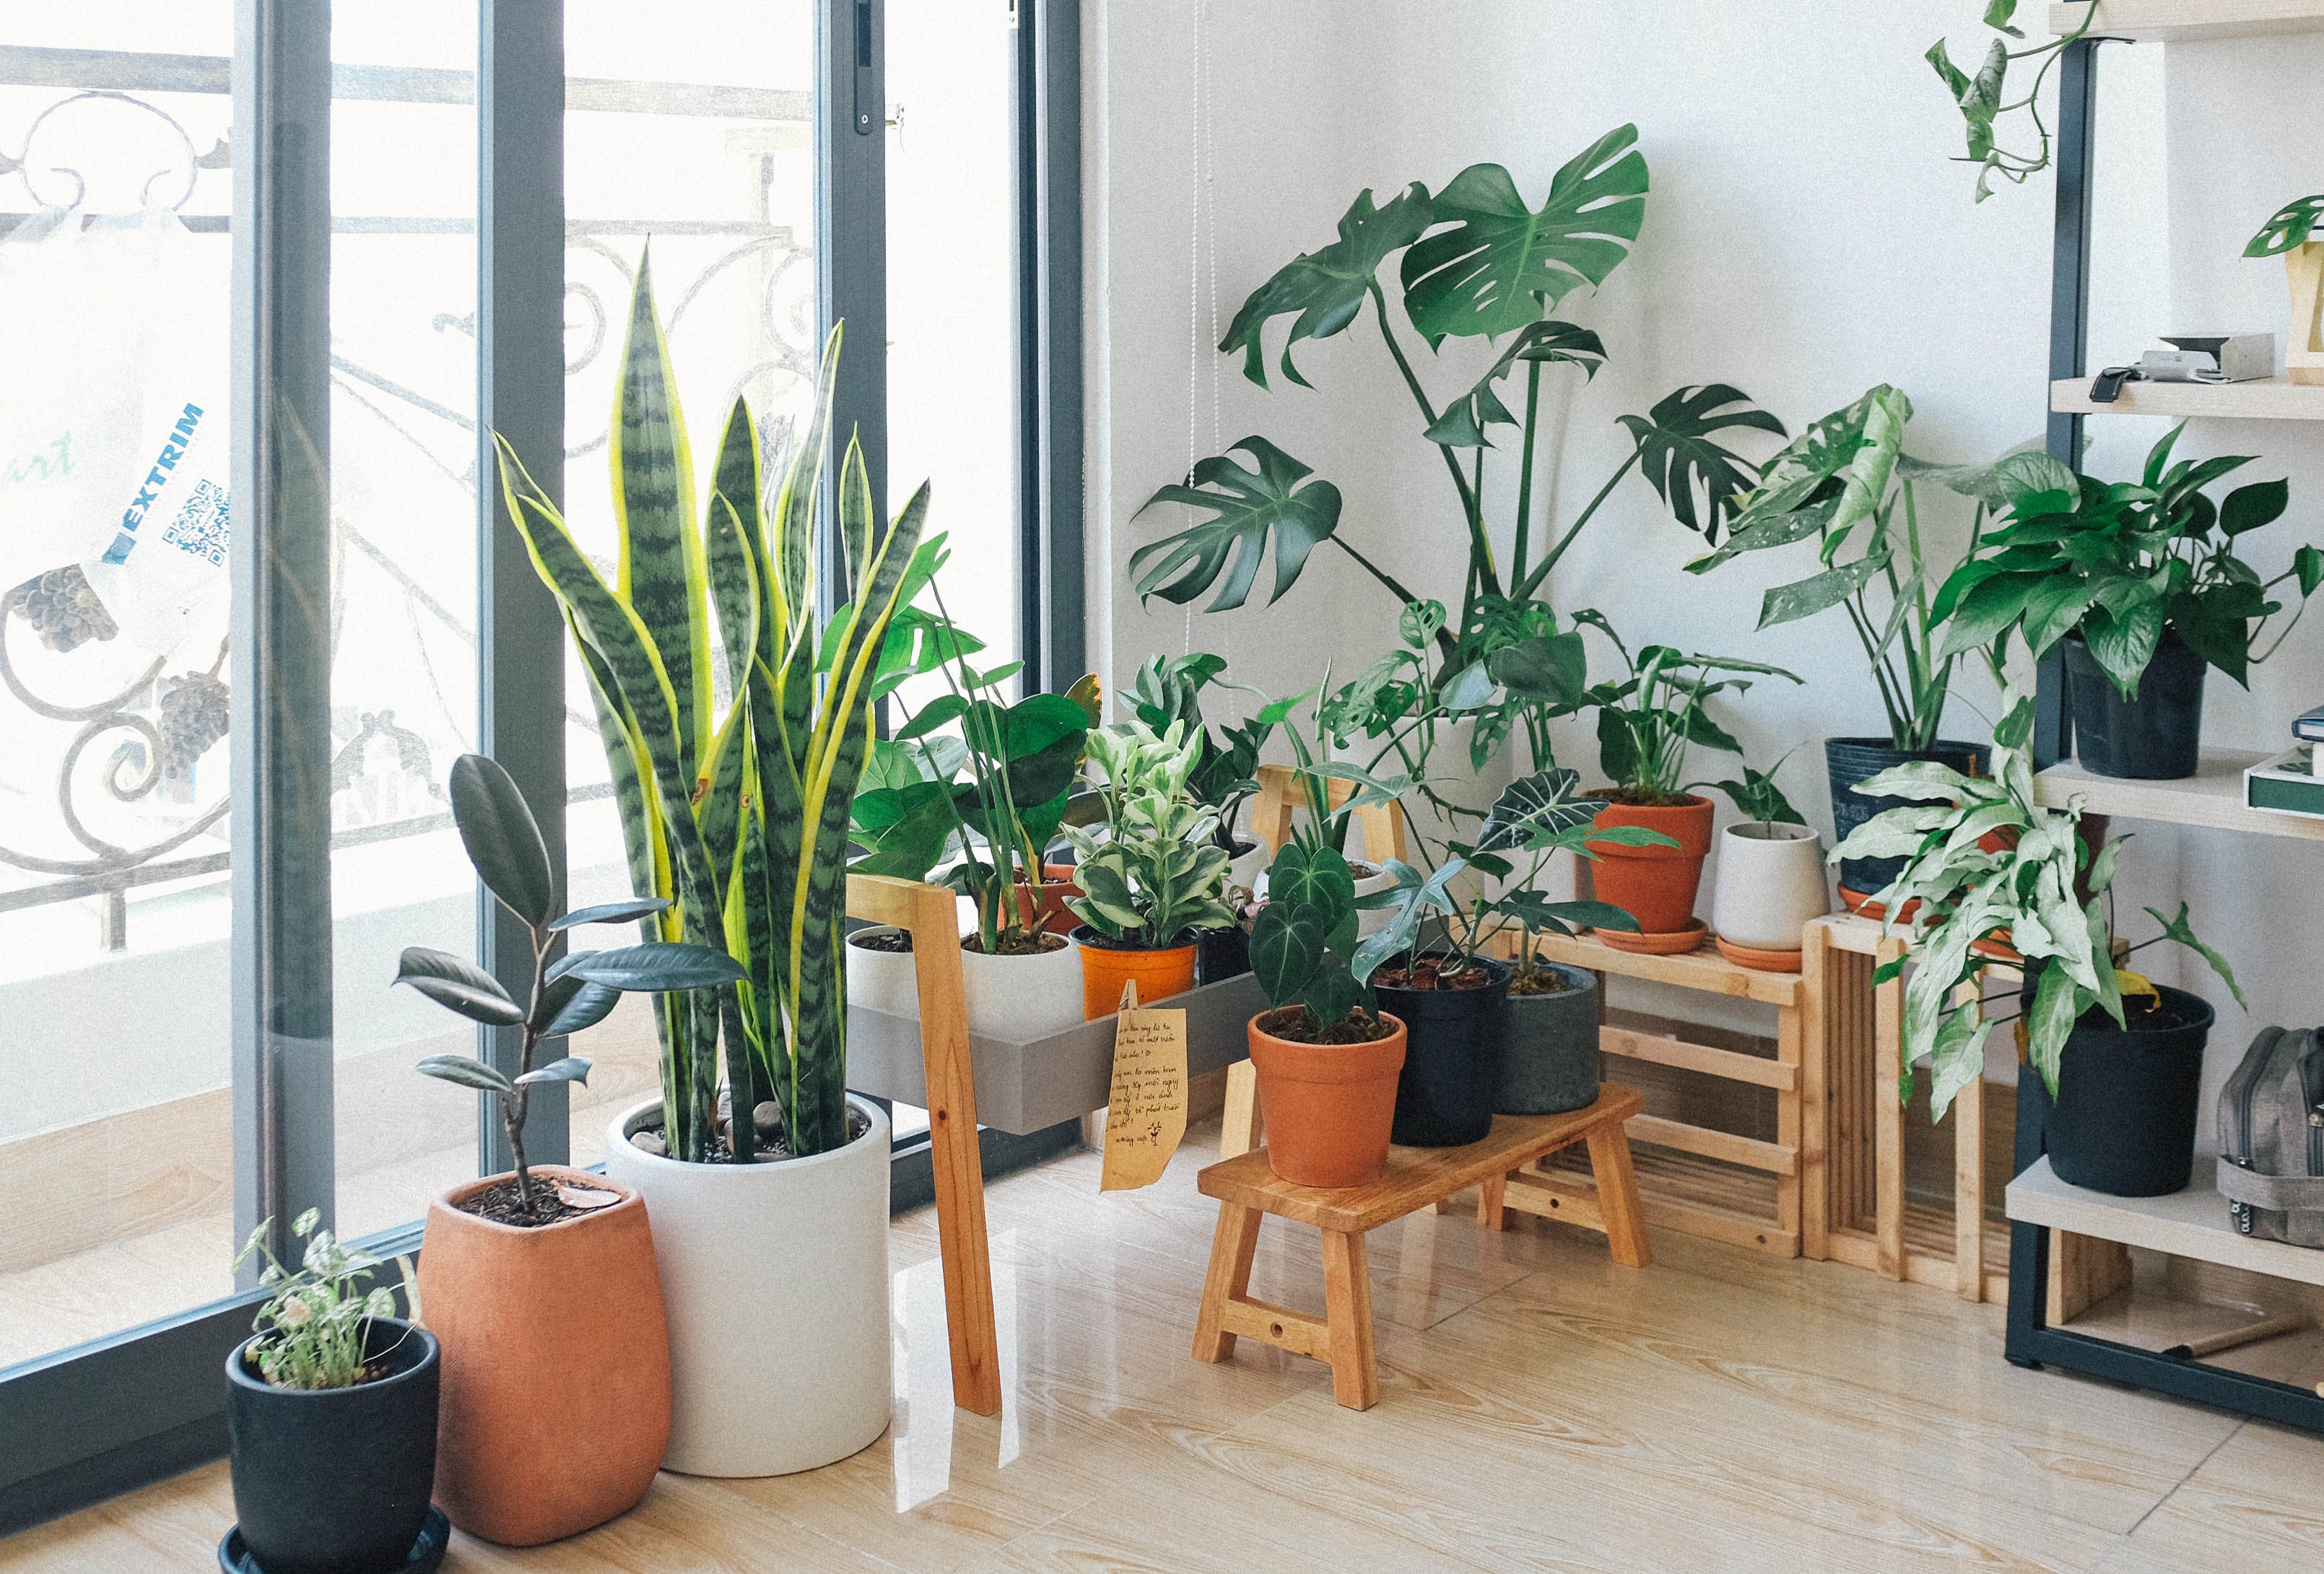 Indoor Plants for Home: The Benefits of Houseplants